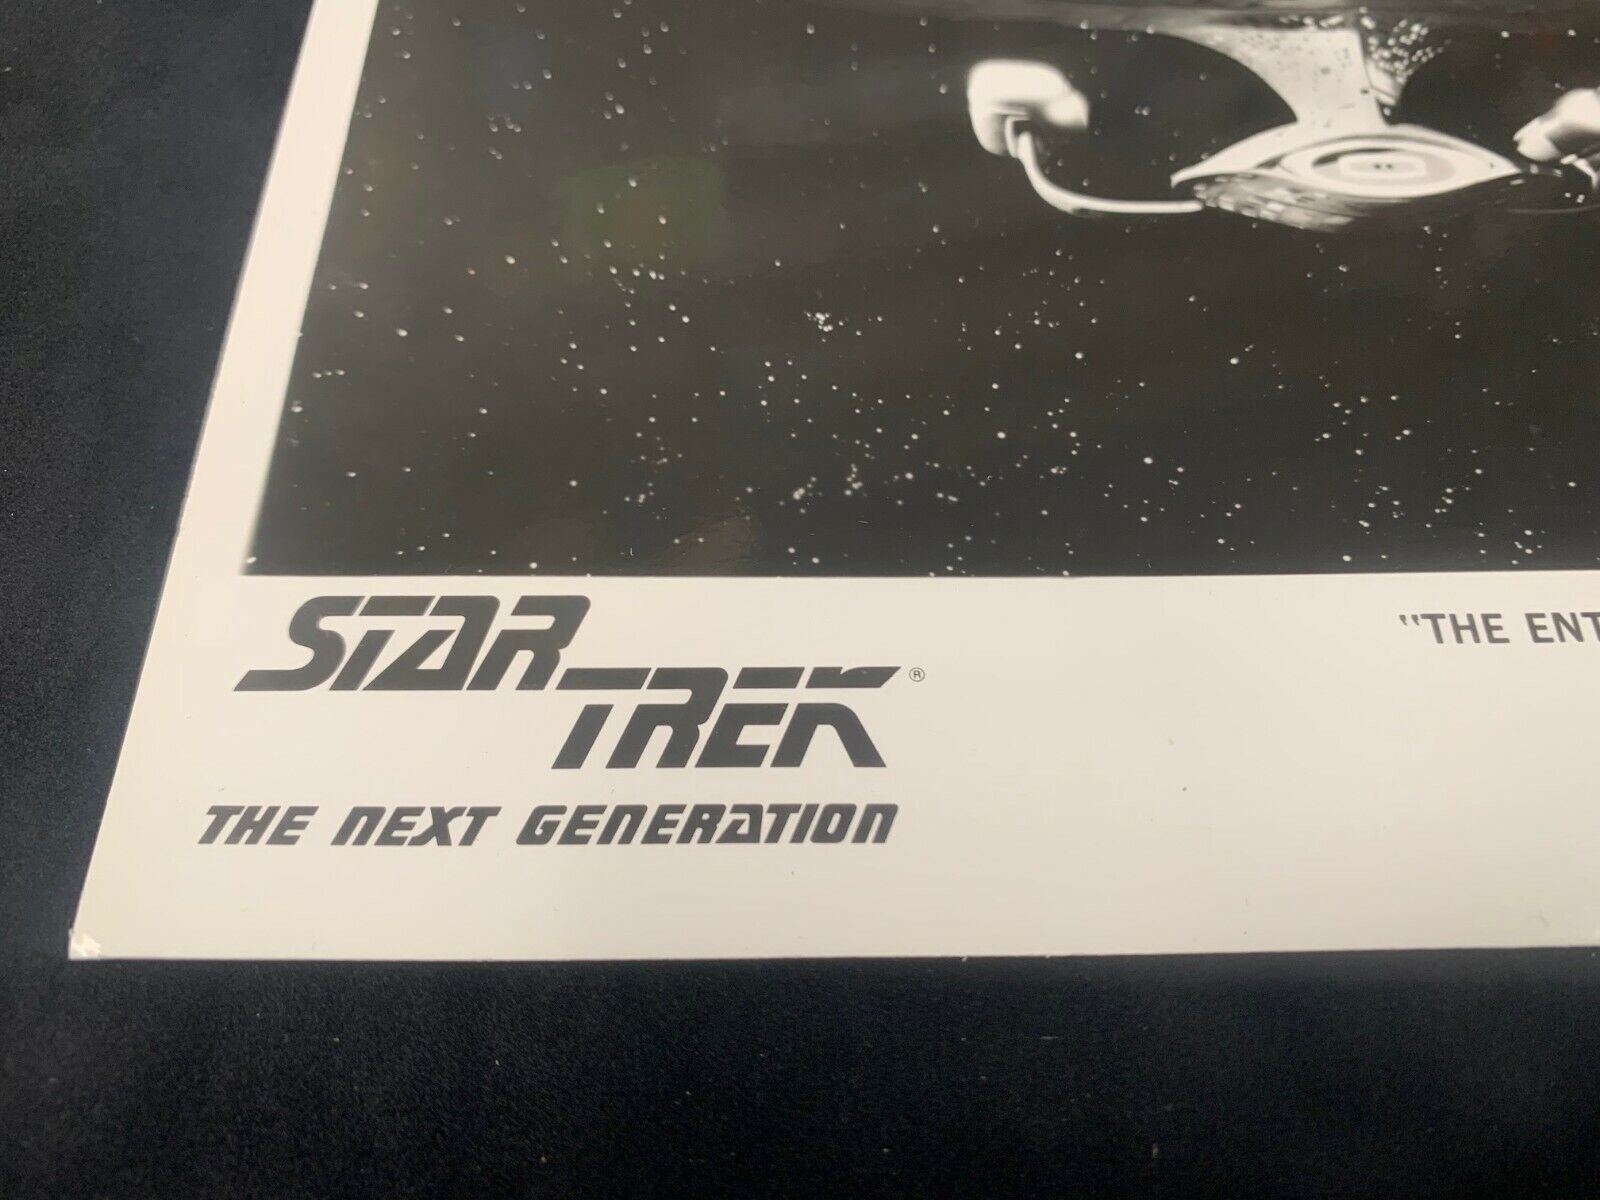 Star Trek The Next Generation StarShip Enterprise in Space B&W 8x10 Photo